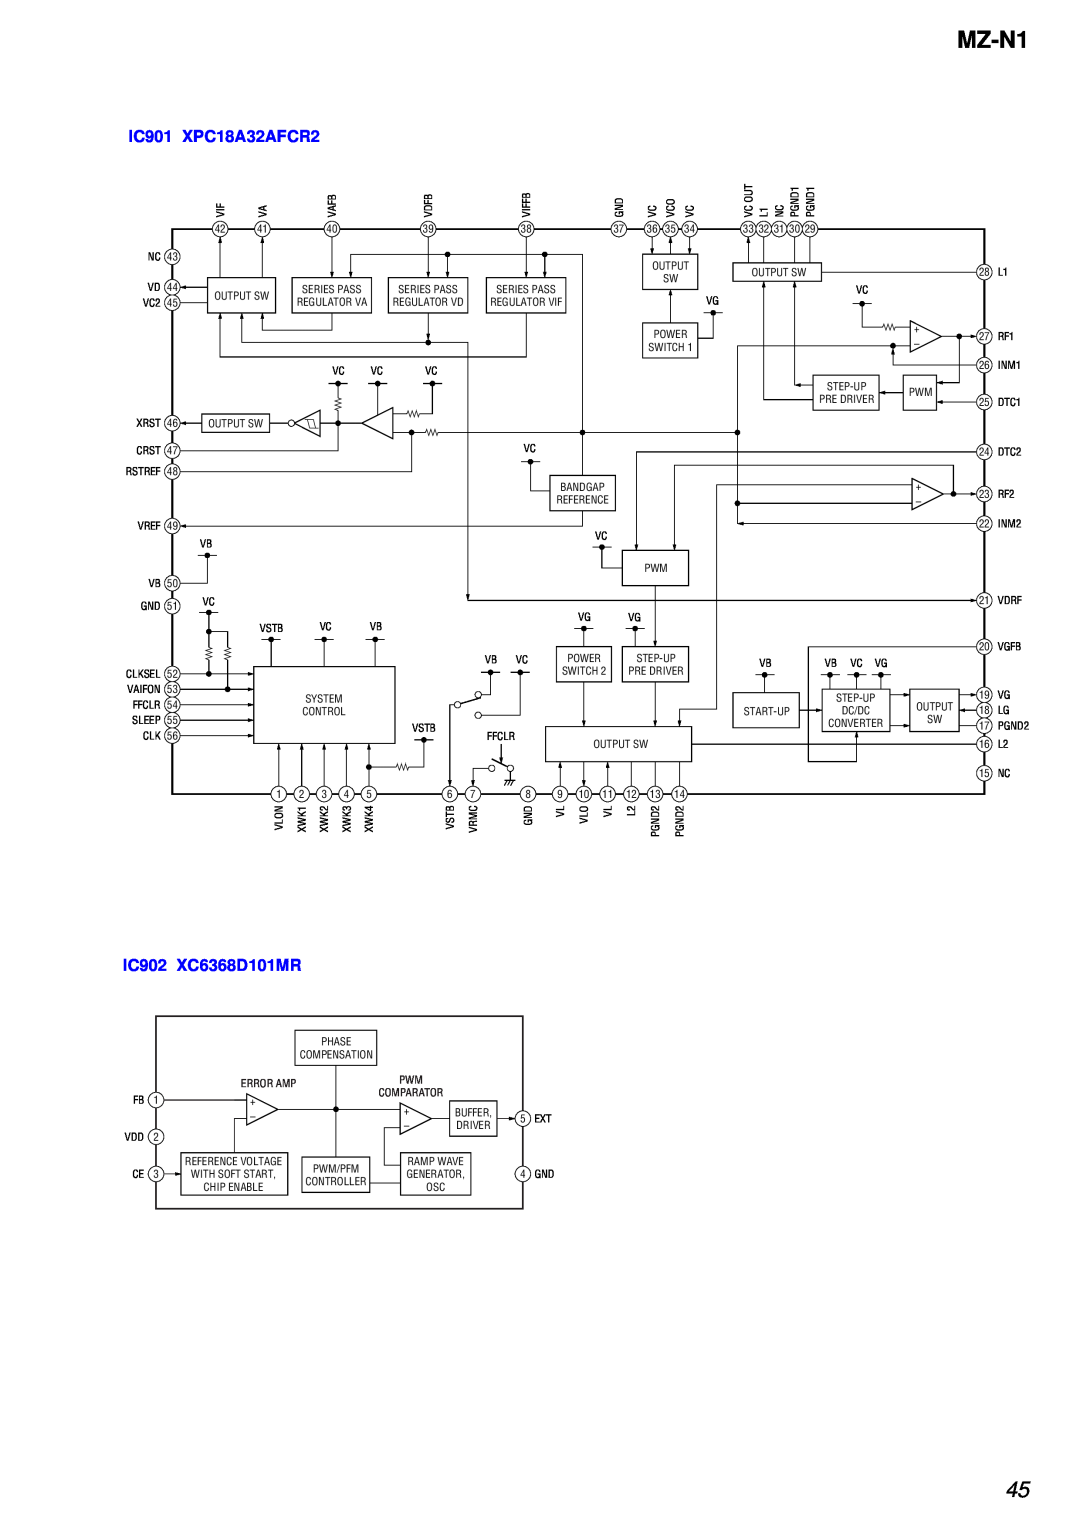 Sony MZ-N1 service manual IC901 XPC18A32AFCR2, IC902 XC6368D101MR 